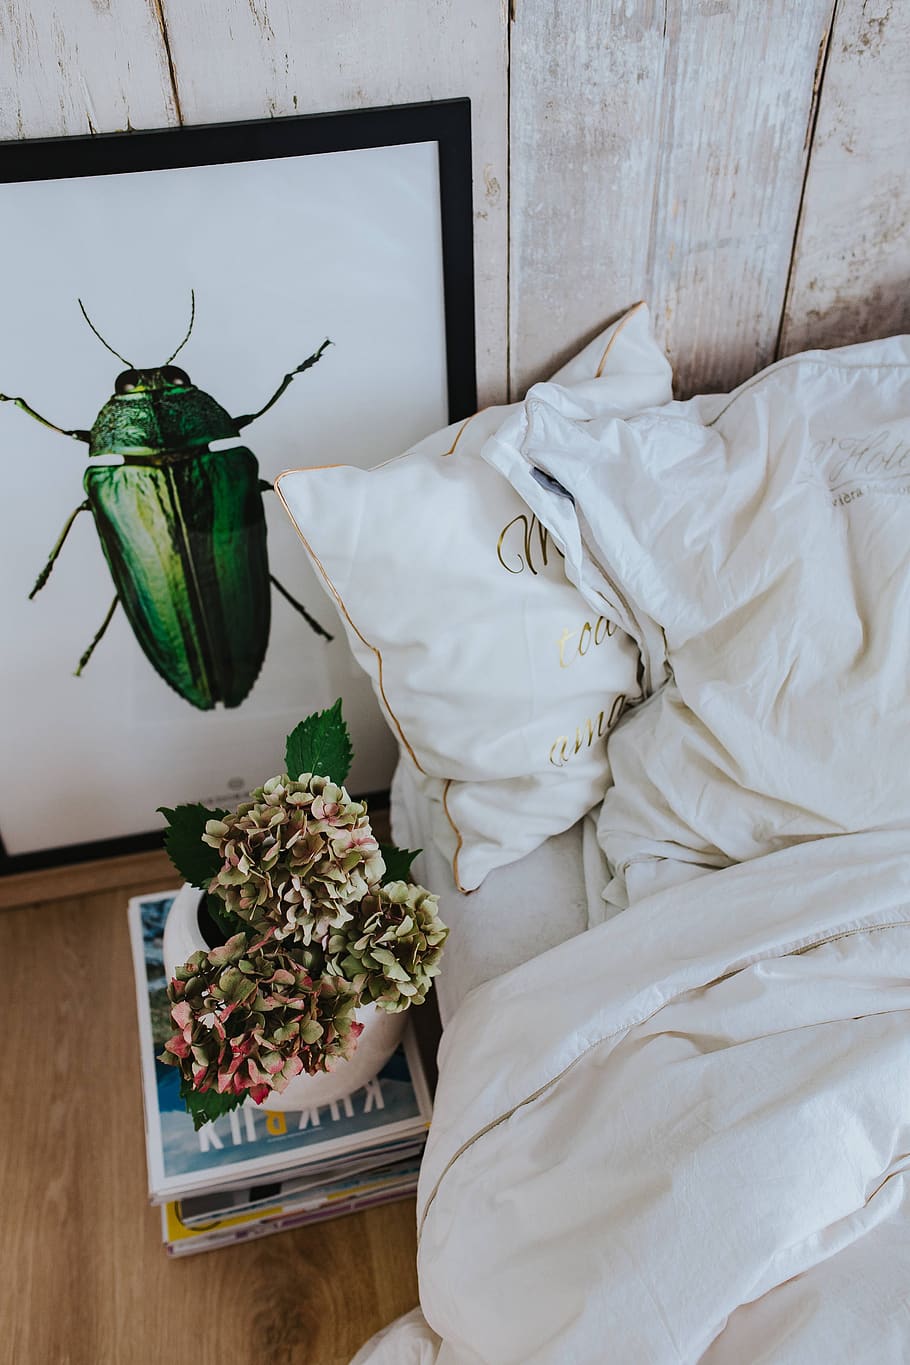 bed, bedding, duvet, bedclothes, sheets, bed linen, beetle, White, green, pot